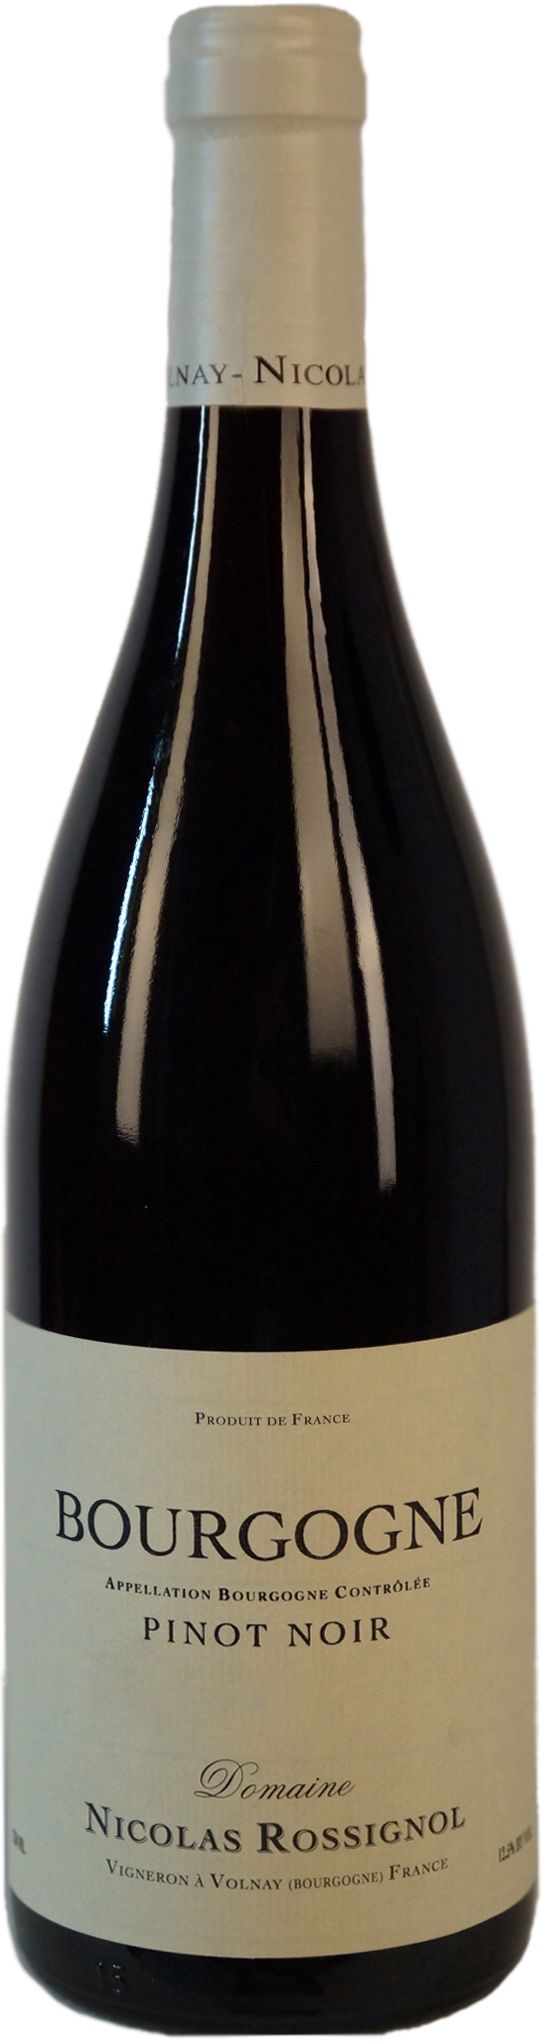 Domaine Nicolas Rossignol, Bourgogne Pinot Noir, 2016